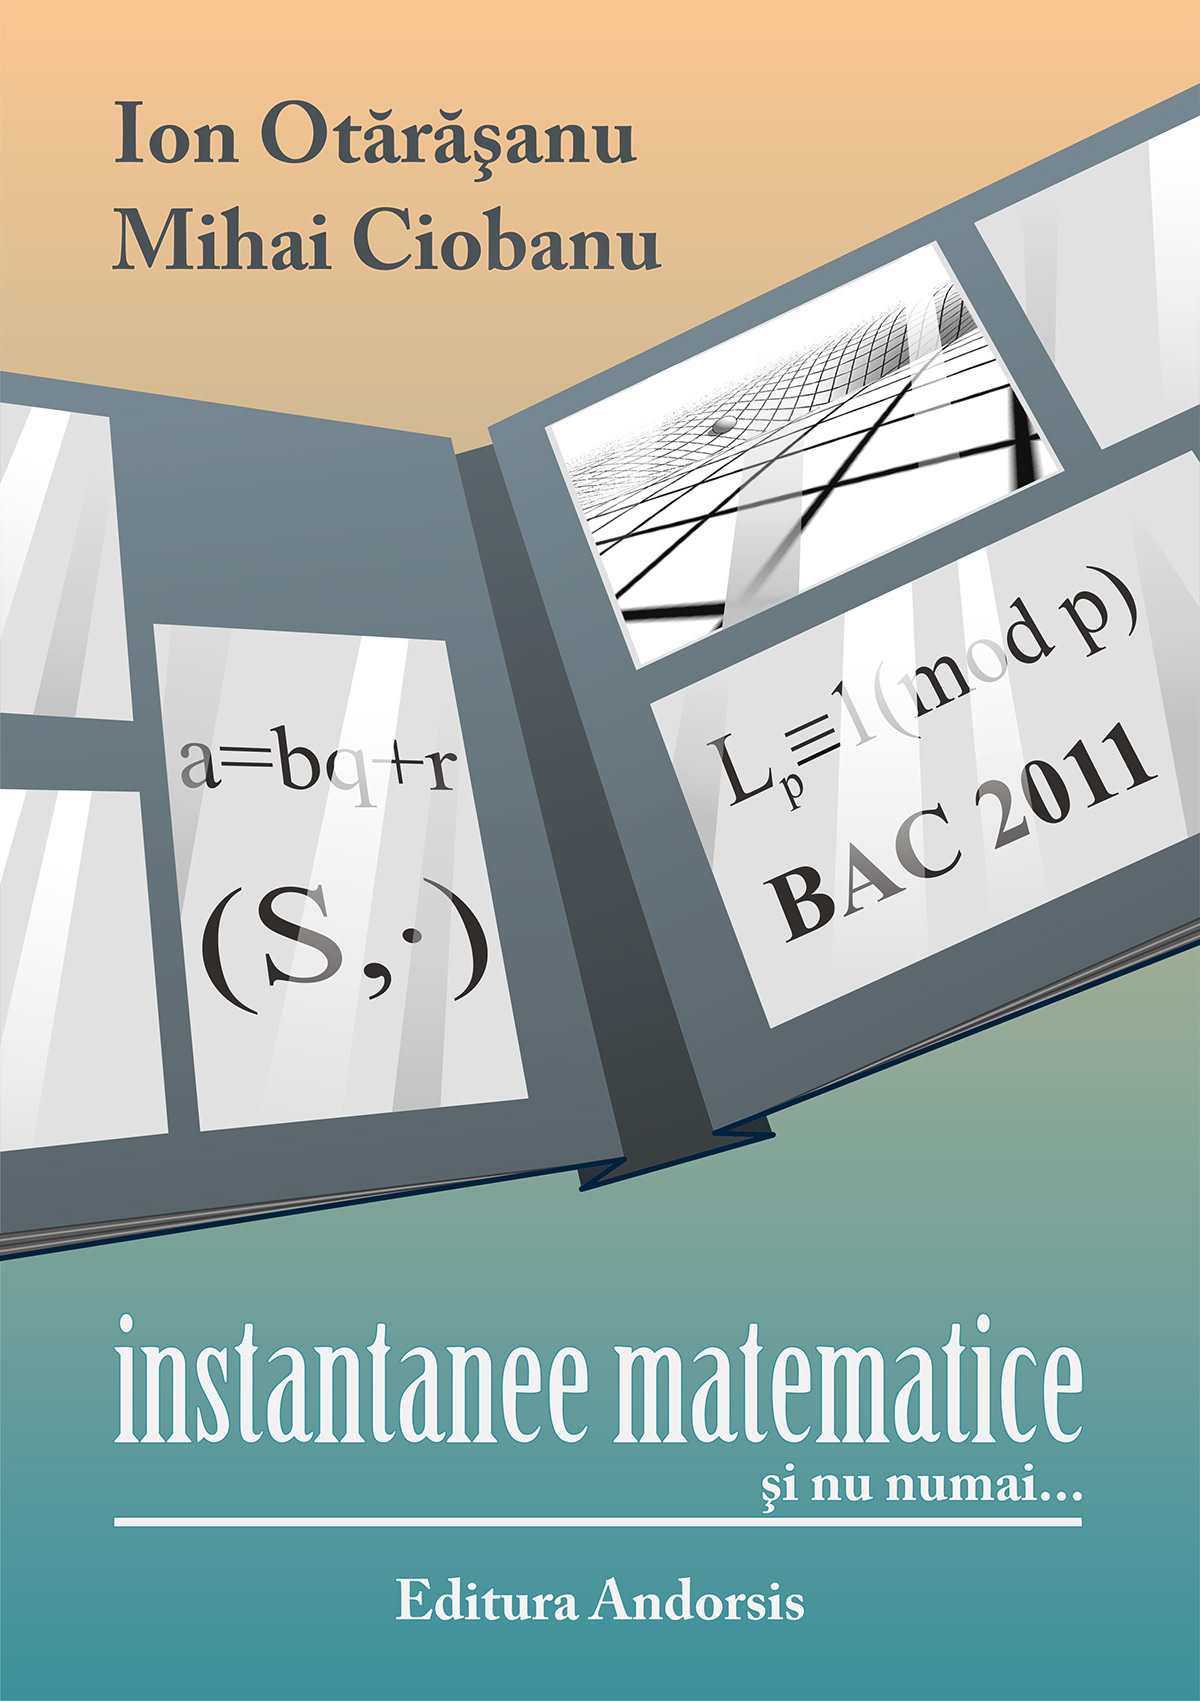 book cover digital